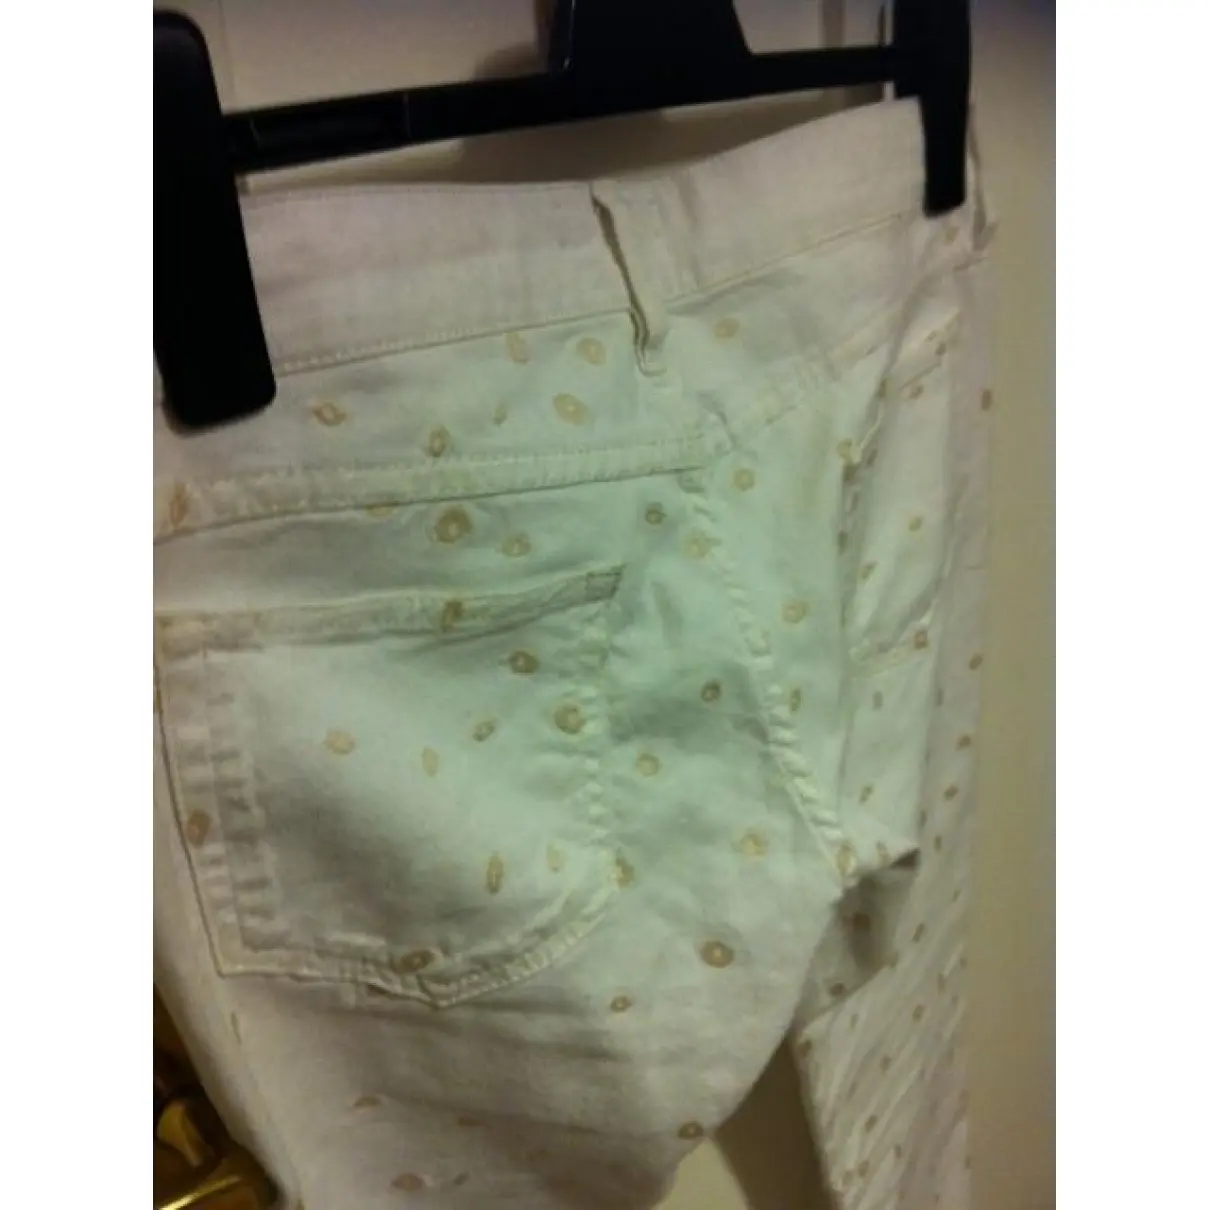 Buy Isabel Marant Etoile White Cotton Jeans online